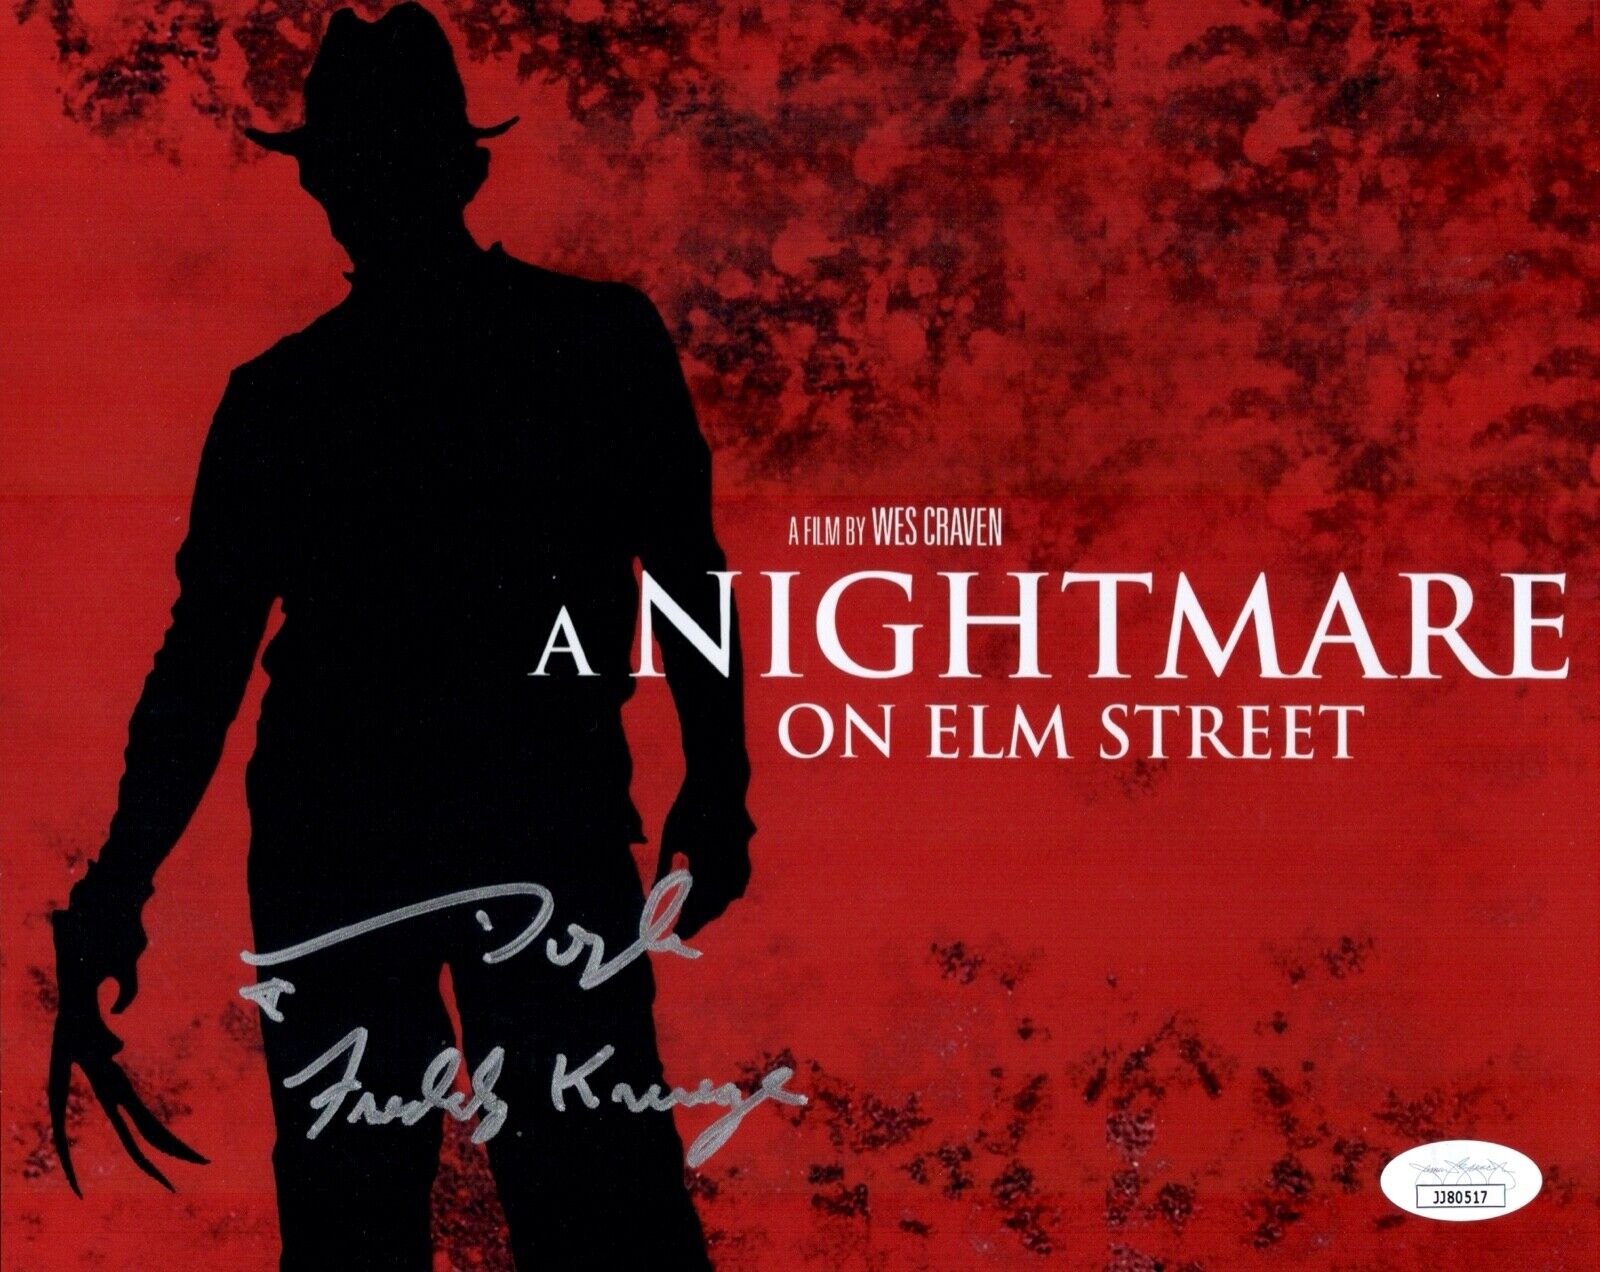 JIM DOYLE Signed Freddy Krueger NIGHTMARE ELM ON ST 8x10 Photo Poster painting Autograph JSA COA